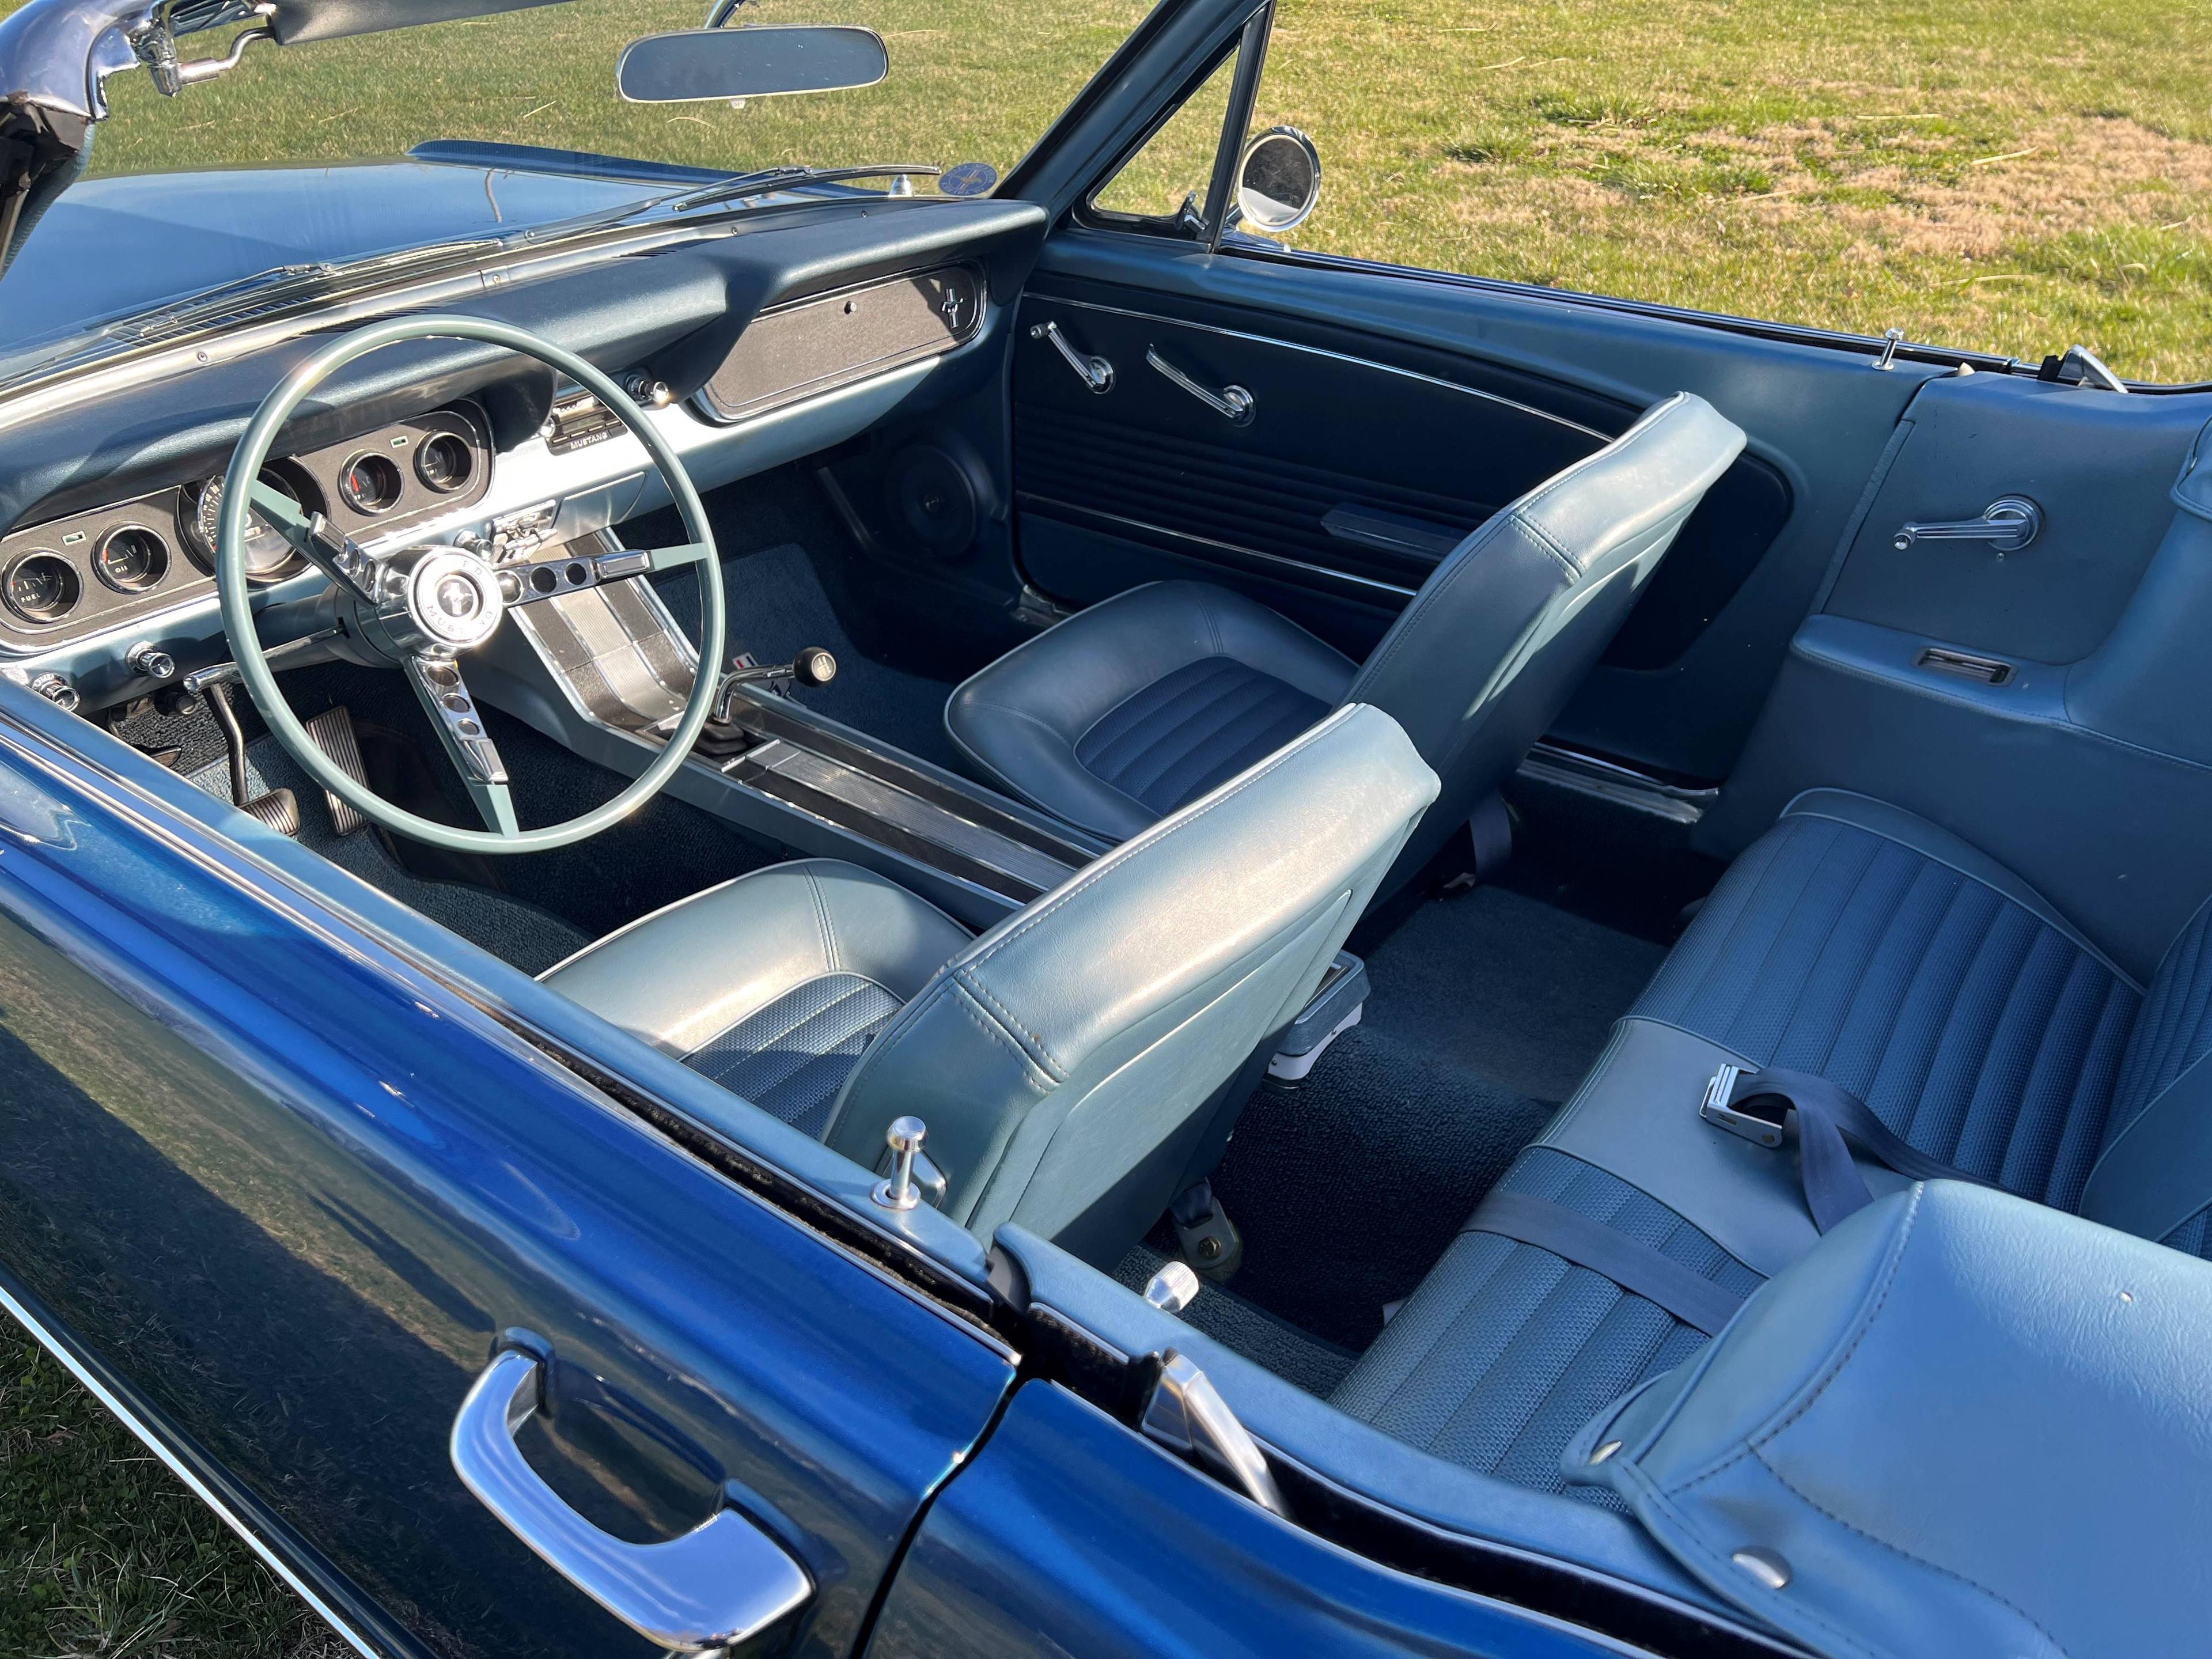 1966 Ford Mustang Convertible. Factory original 289 cid 2V 200hp V-8 engine